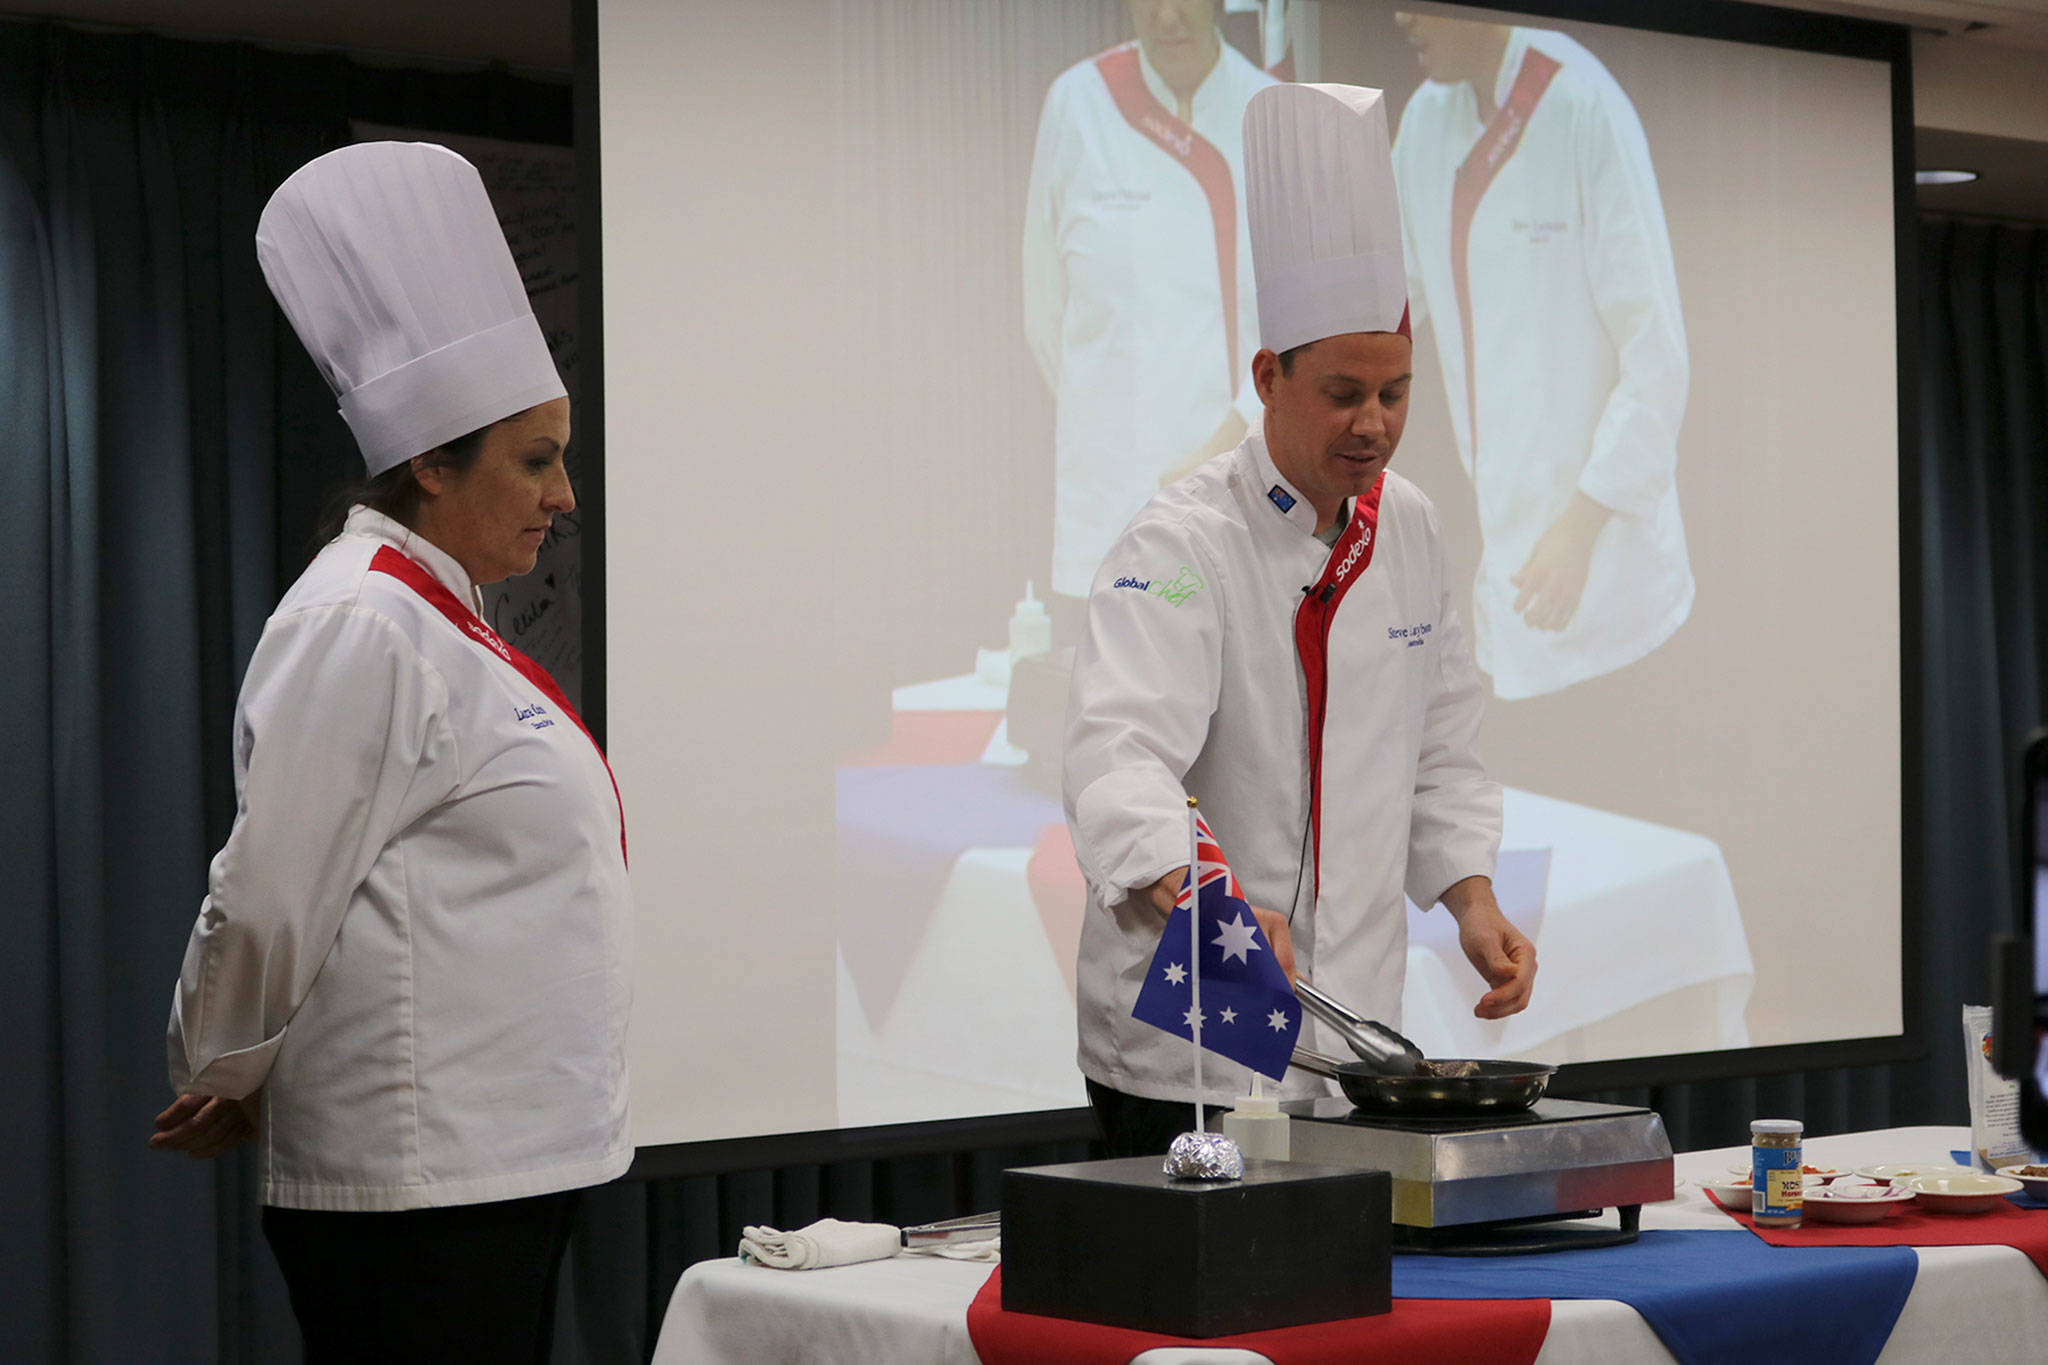 Chef Steve Laybourn demonstrates how to sear kangaroo meat. Katie Metzger/staff photo